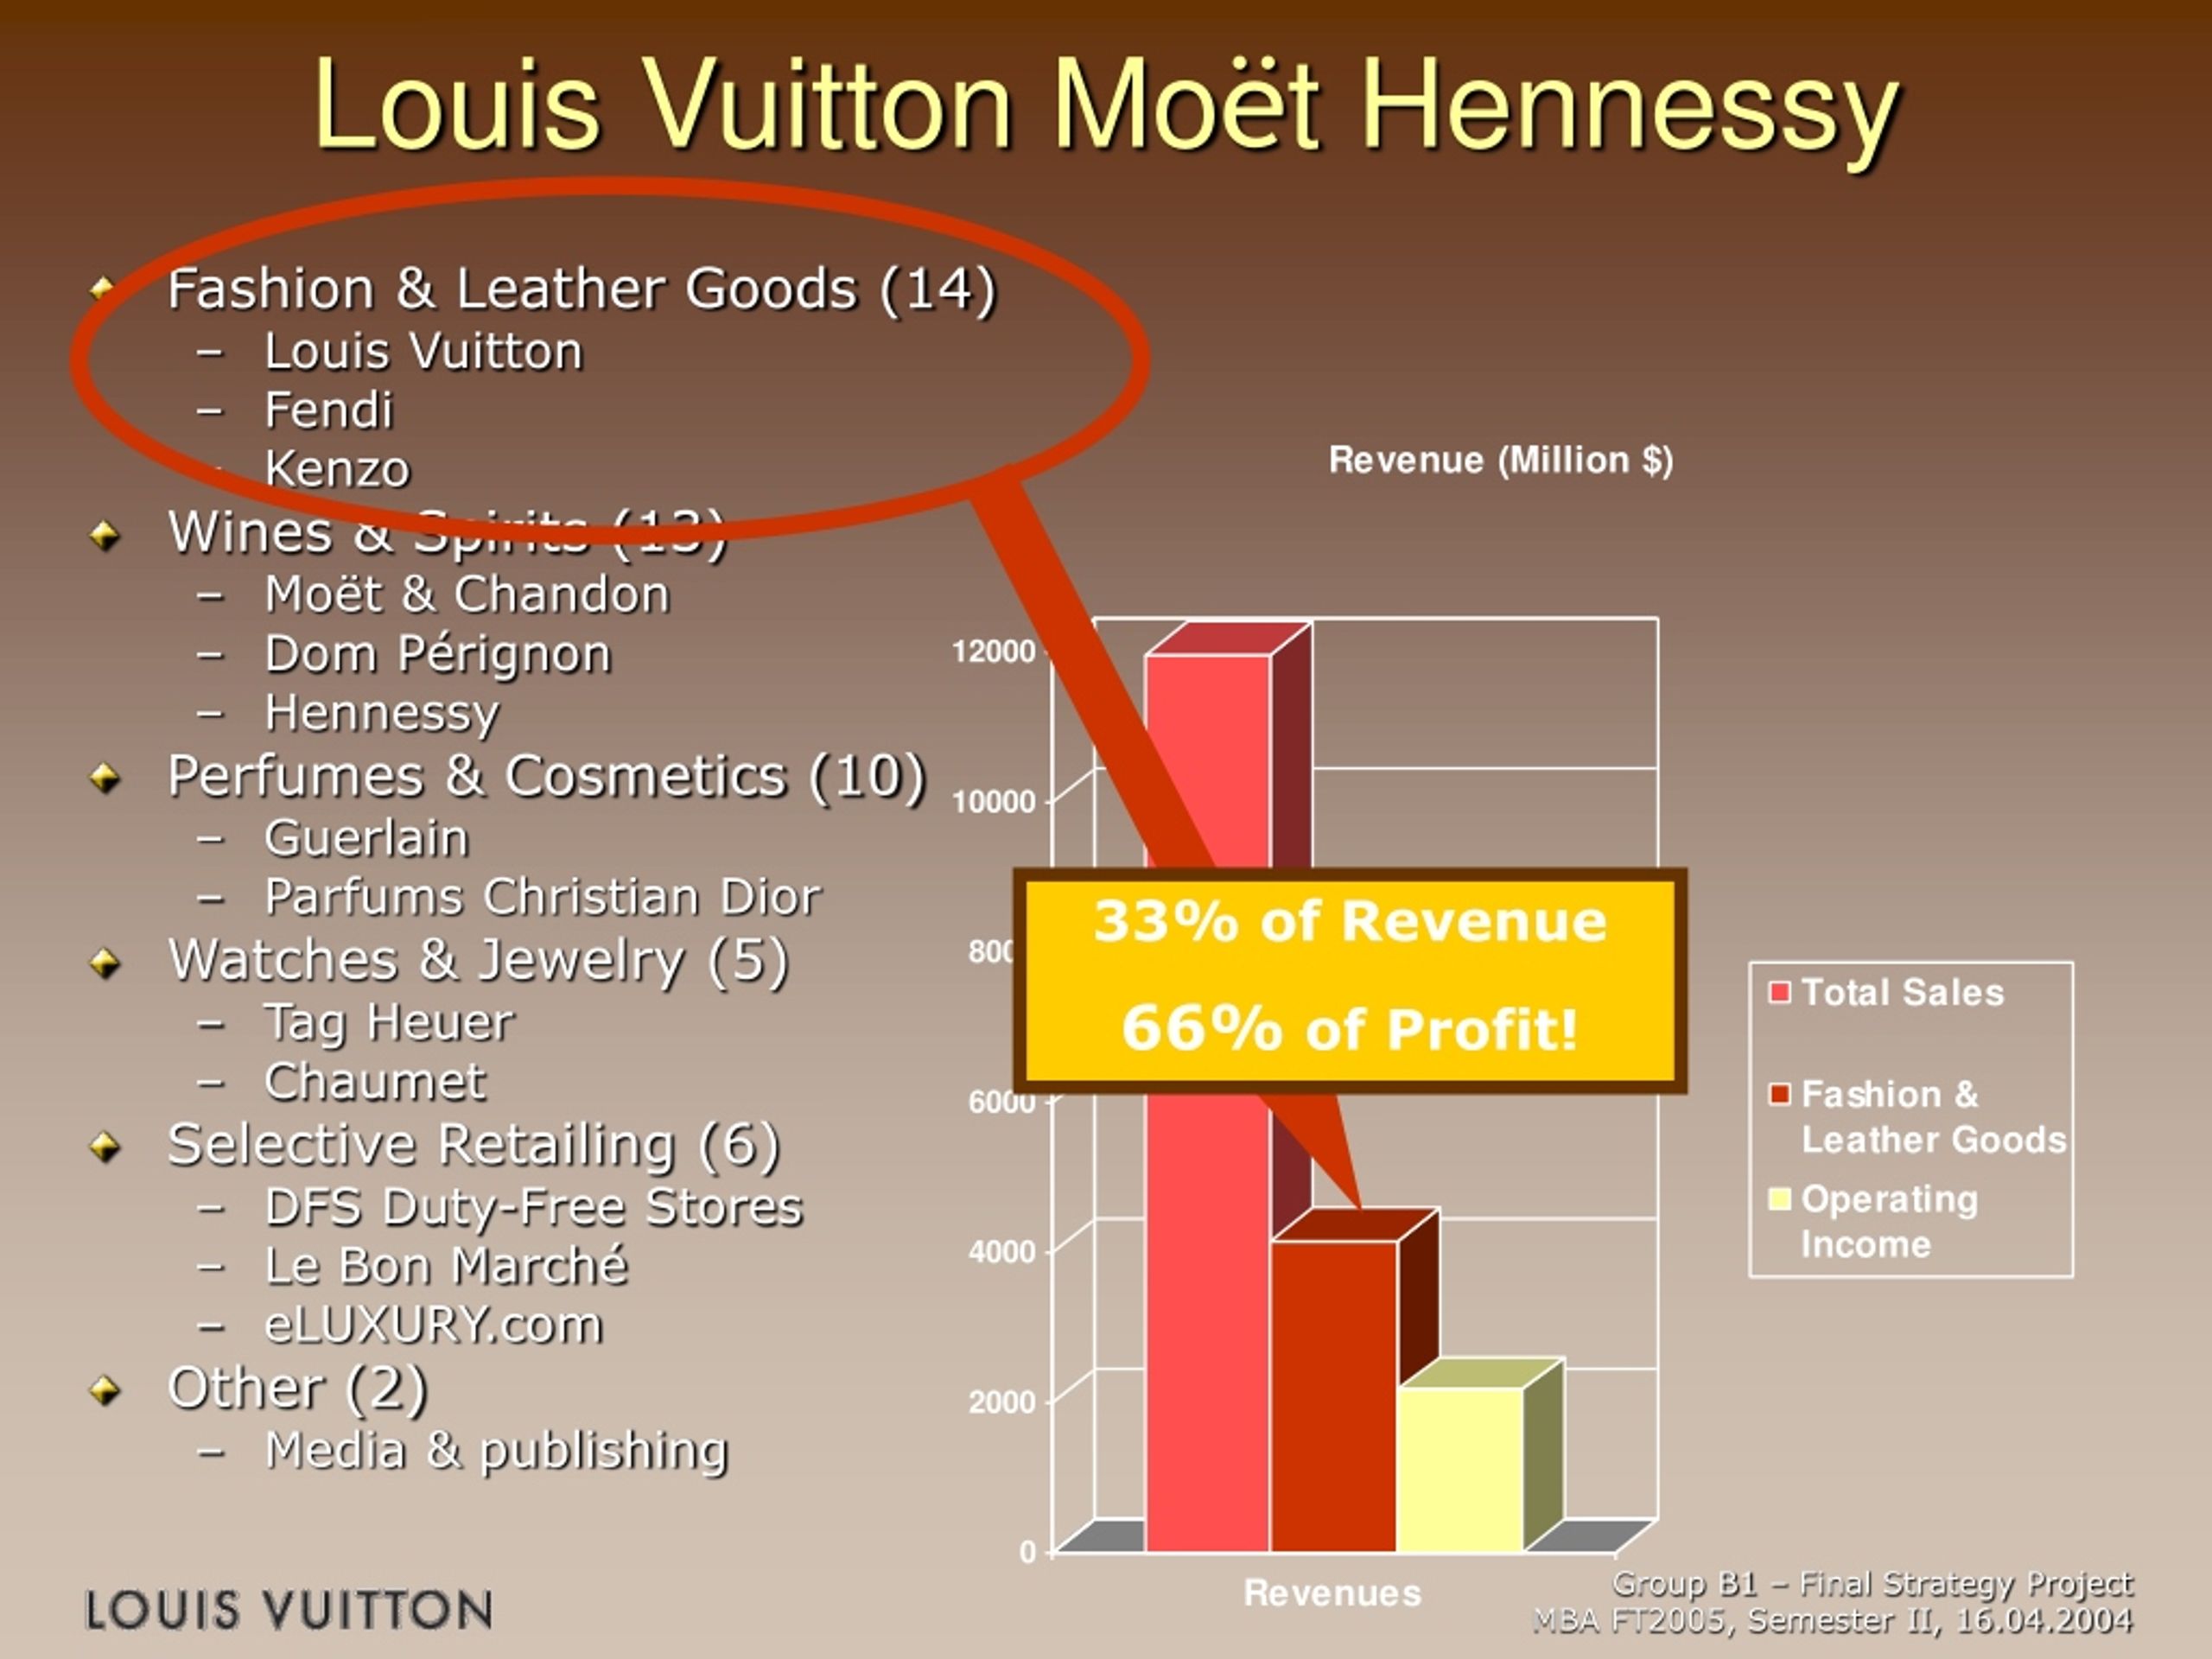 PPT - 66% Off On Louis Vuitton Handbags Across USA. PowerPoint Presentation  - ID:1452835